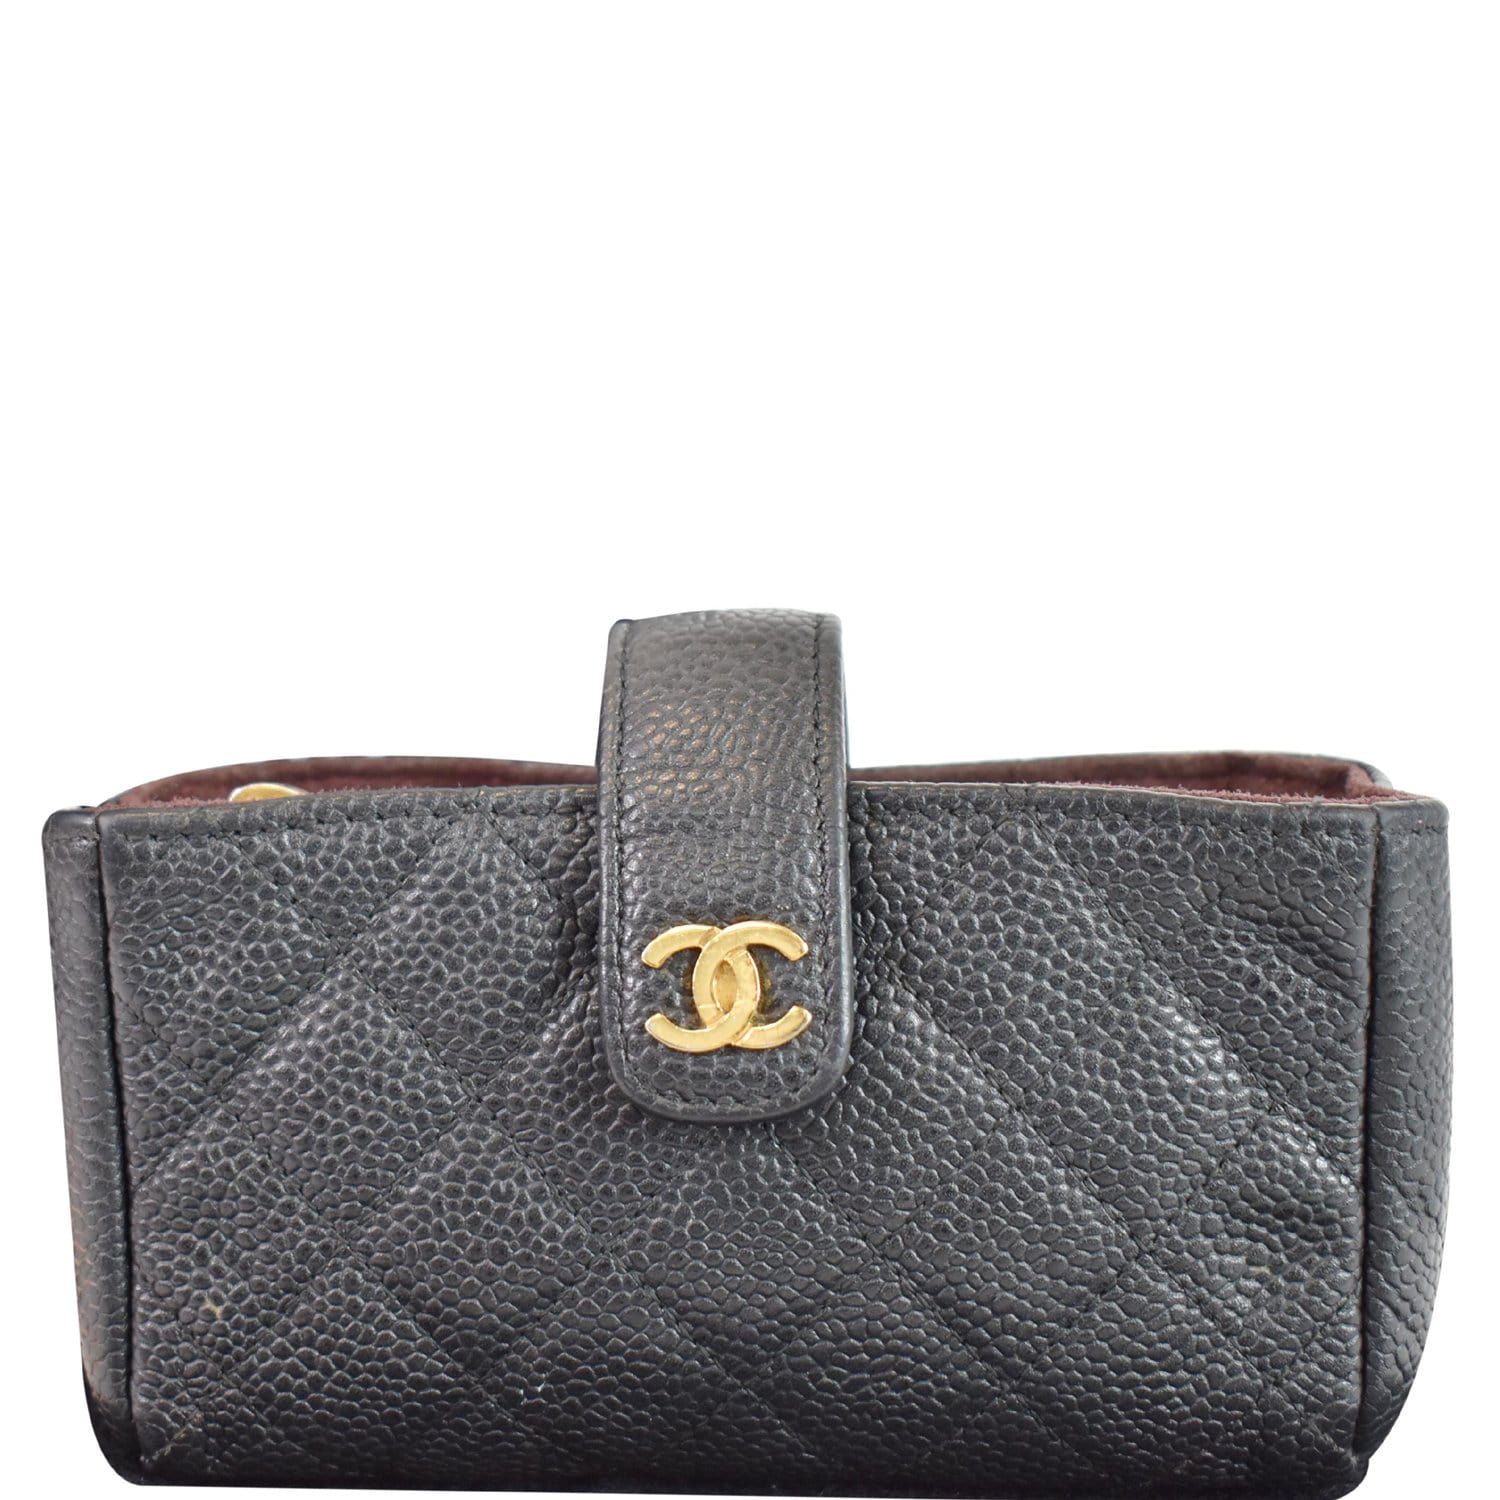 Handbags Chanel Boy Phone Holder Gold Chain Wallet on Chain